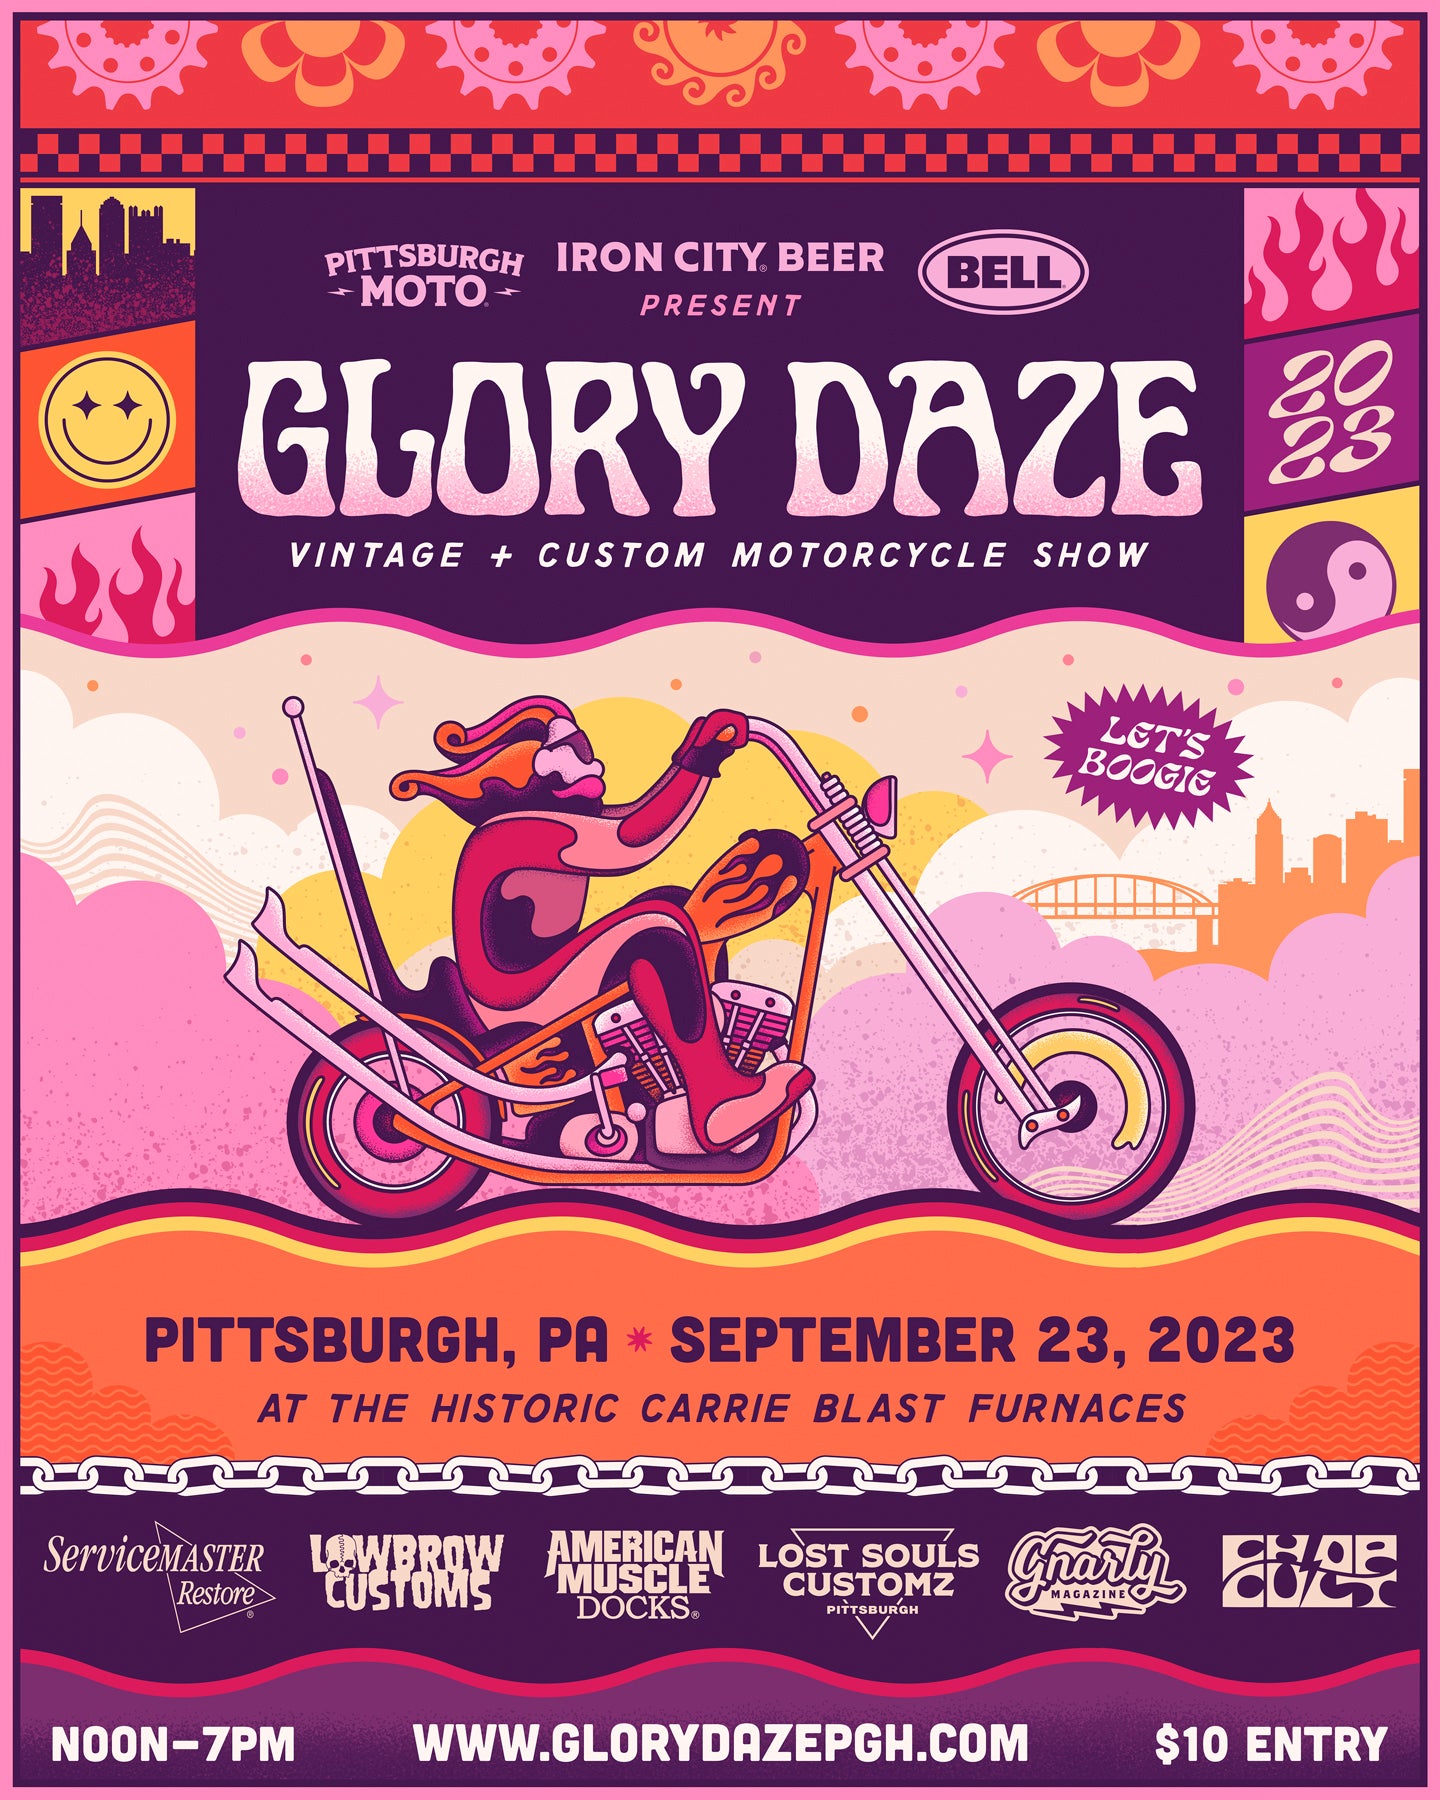 Kurt Diserio artist designer animated illustration poster glory daze motorcycle show pittsburgh event